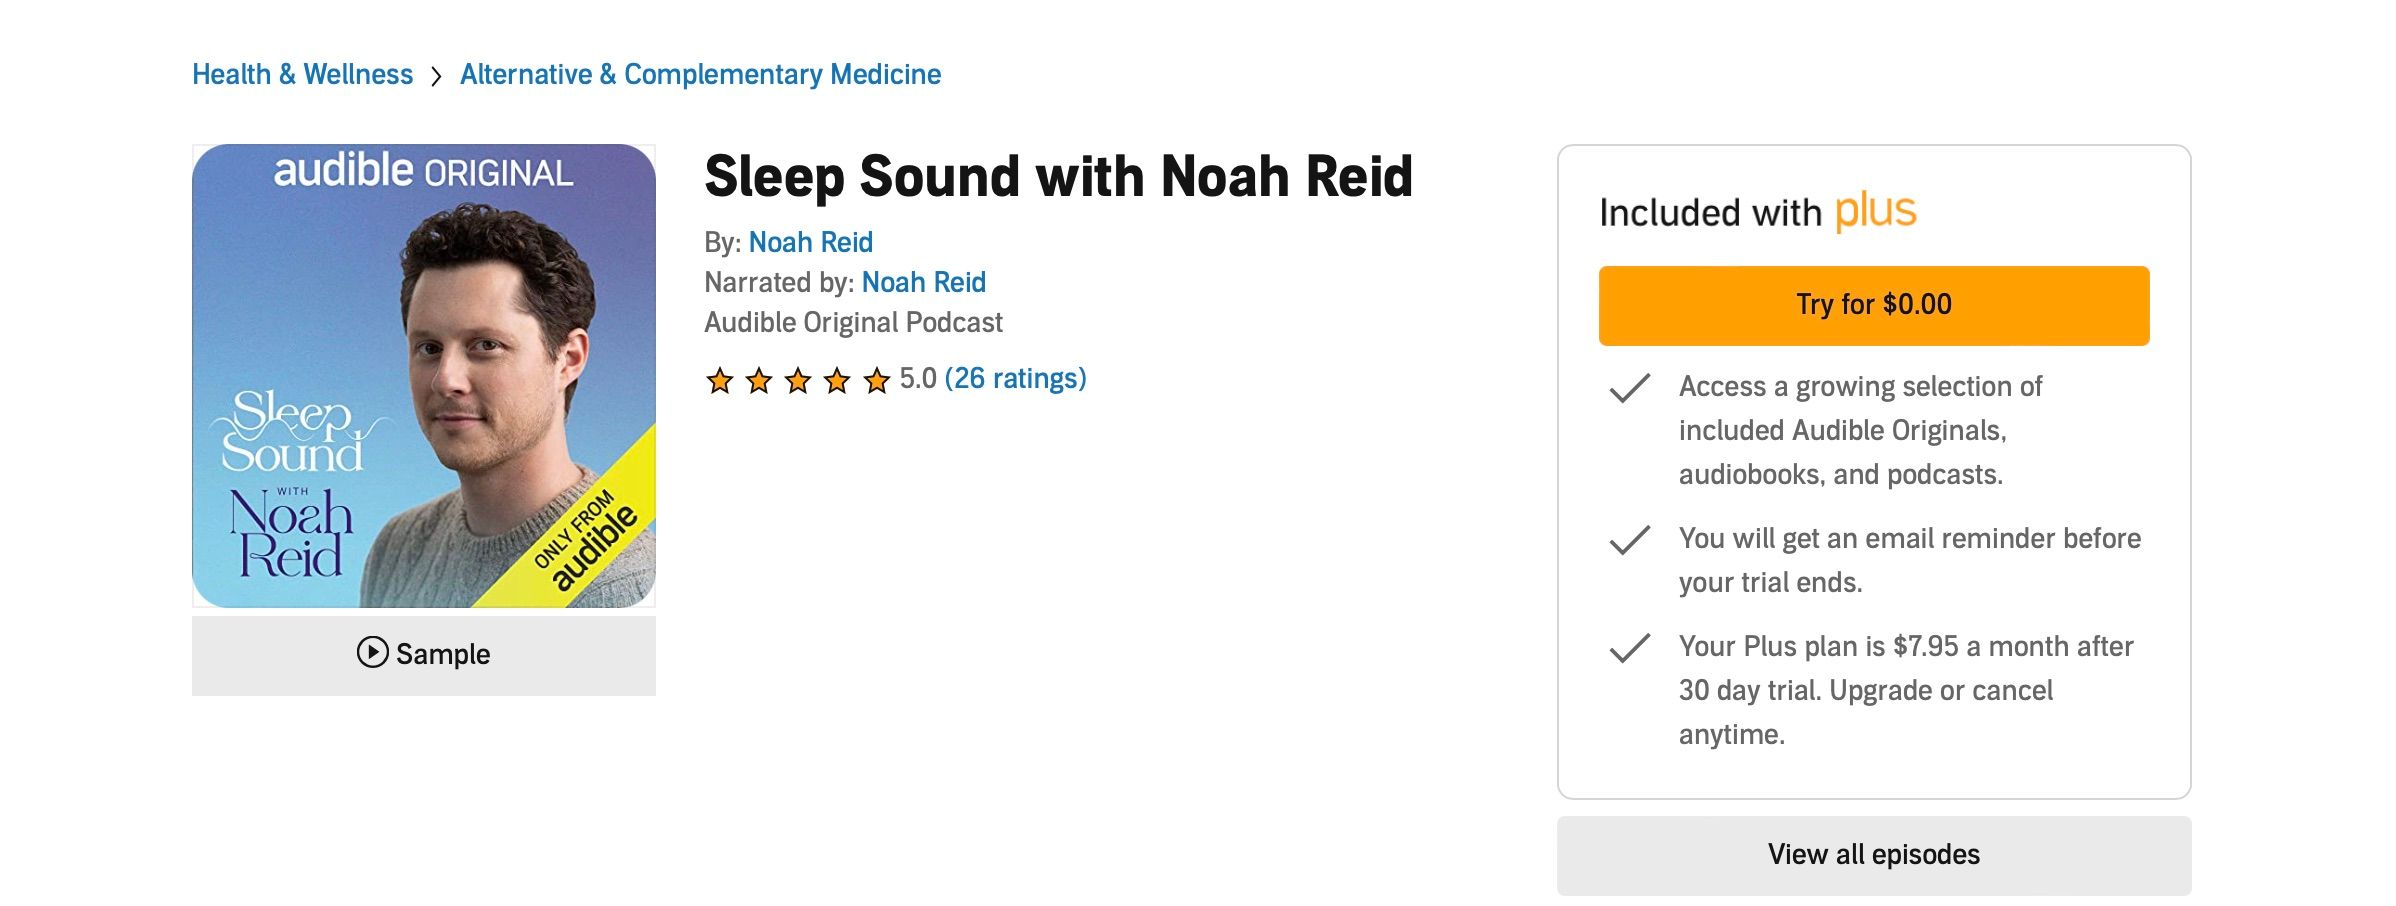 Screenshot showing Sleep Sound audio series from Audible